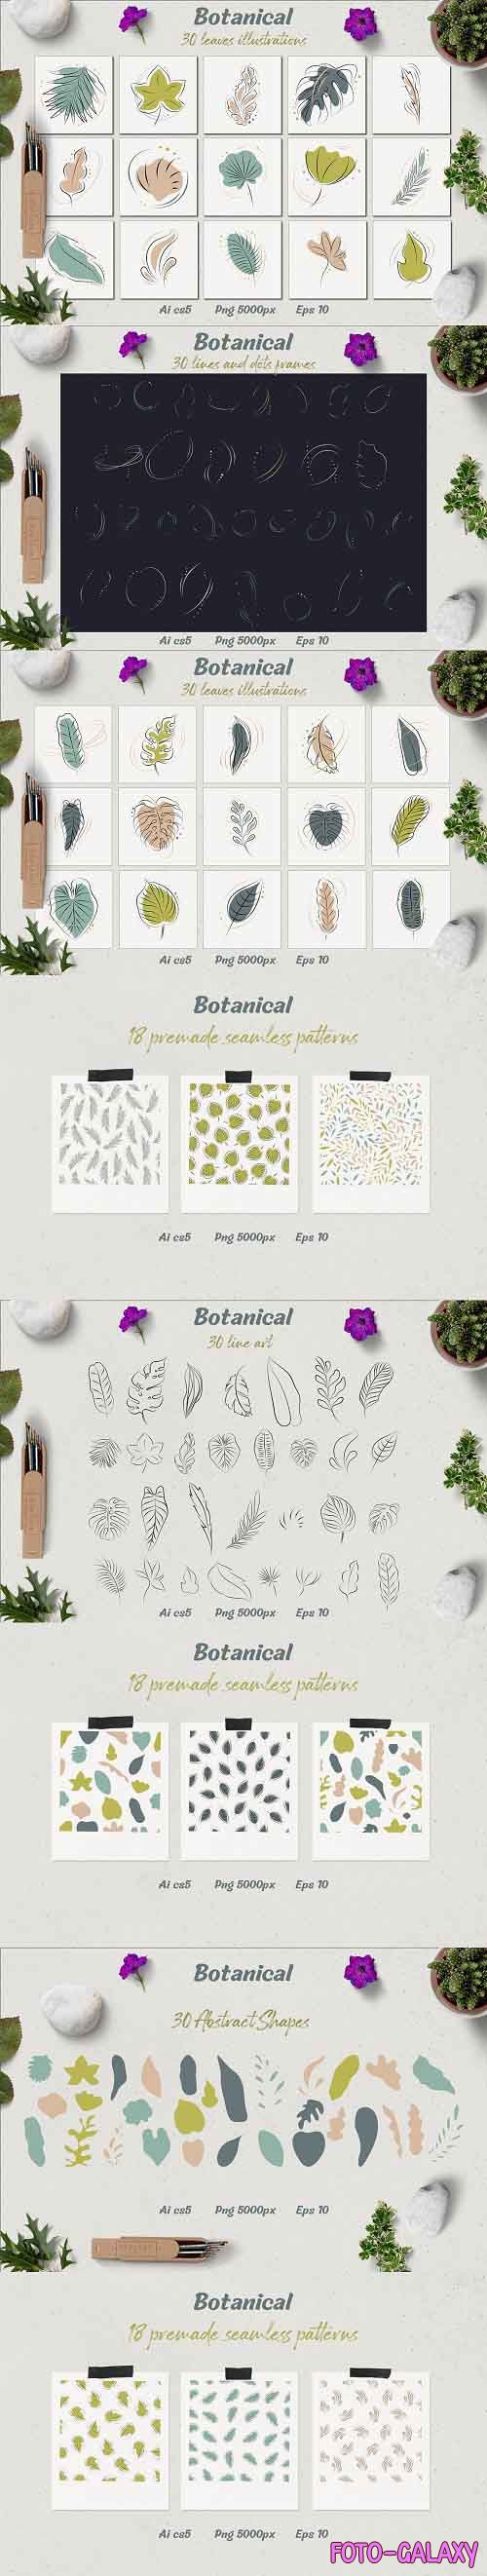 Botanical - leaves illustrations - 4824083